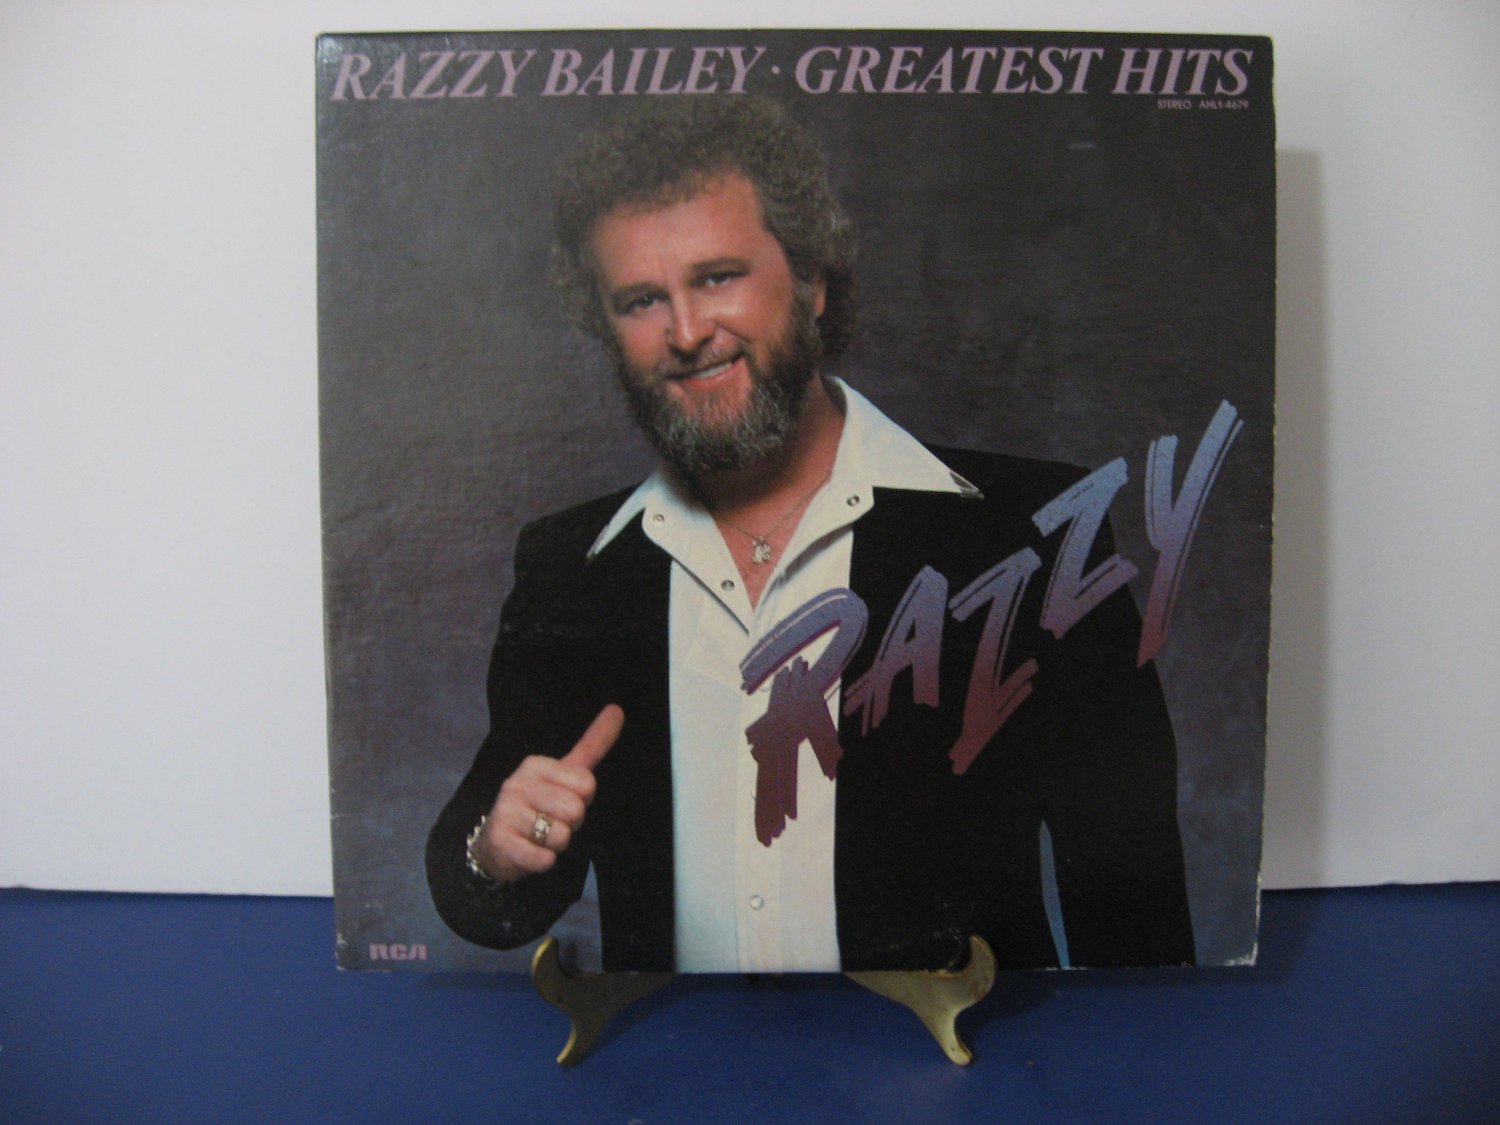 Razzy Bailey - Greatest Hits - Circa 1983